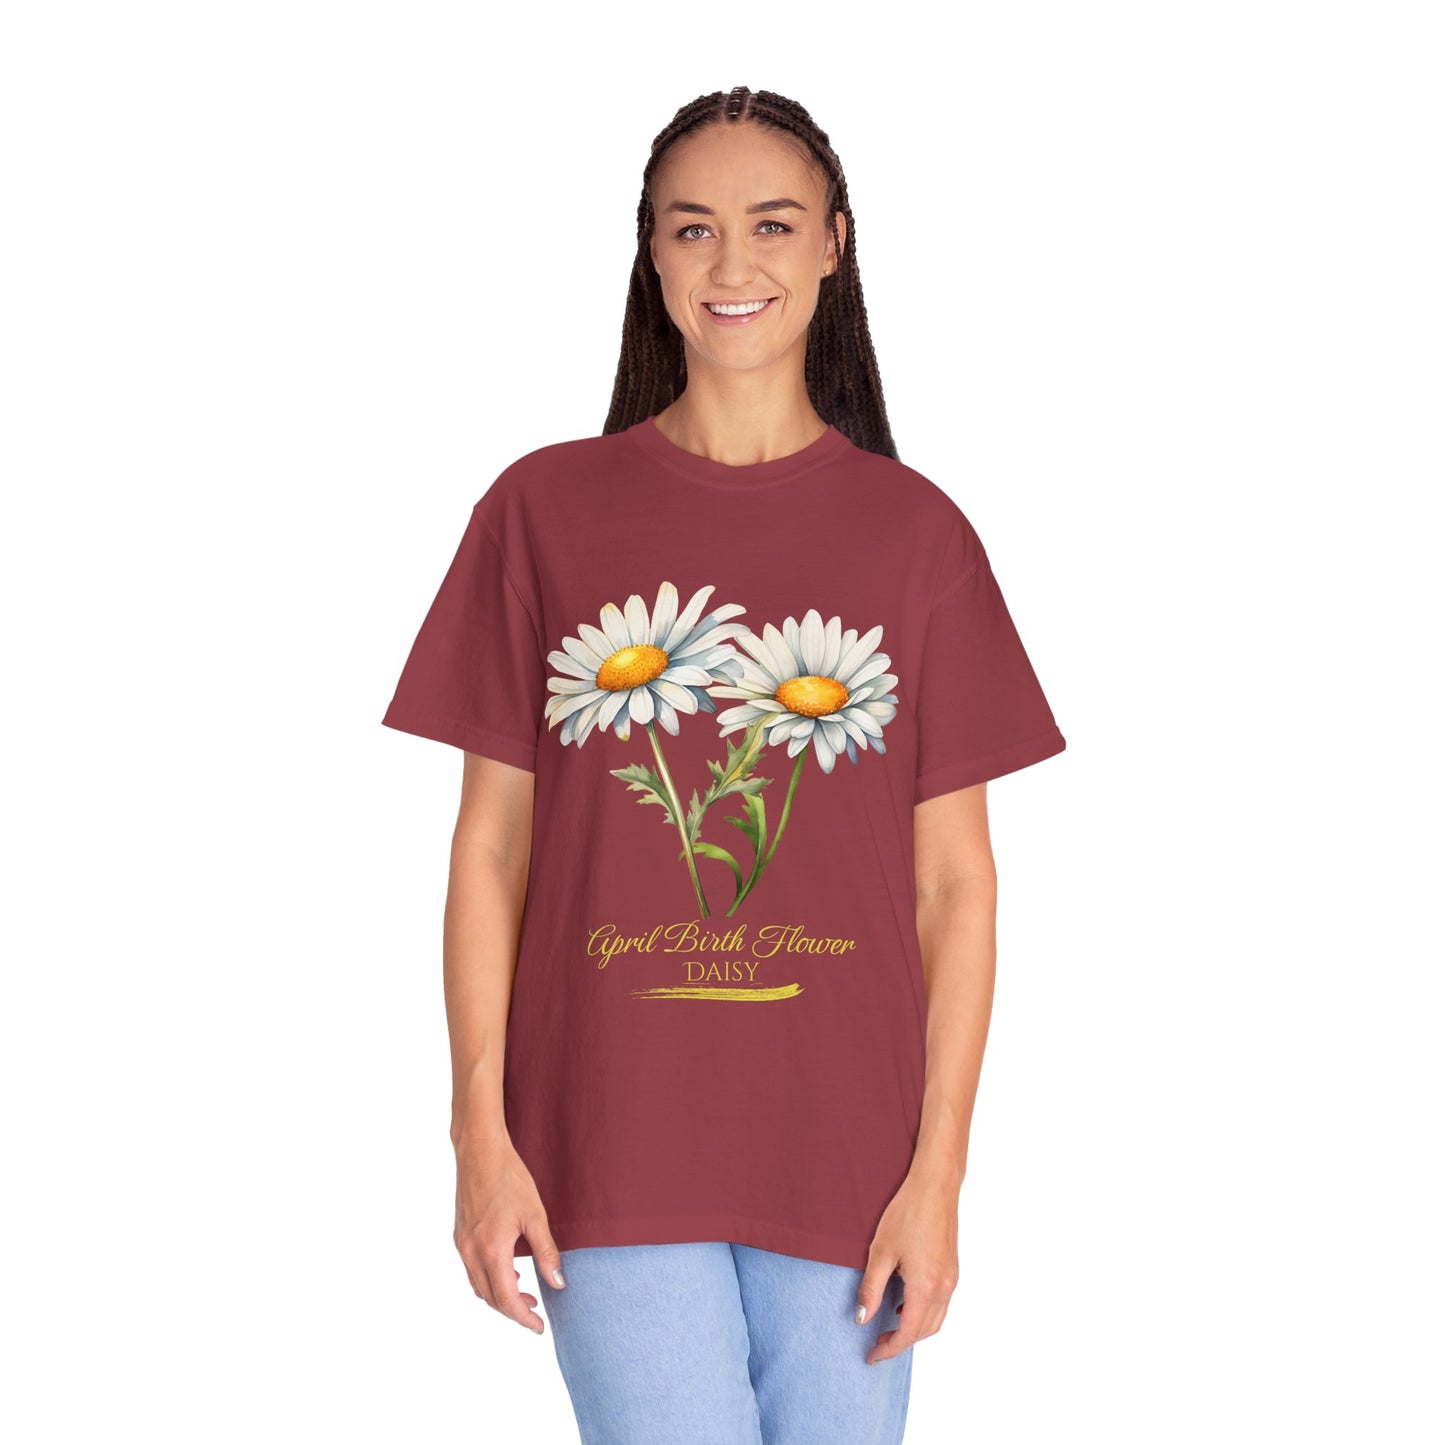 April Birth Flower "Daisy" (For Print on Dark Fabric) - Unisex Garment-Dyed T-shirt